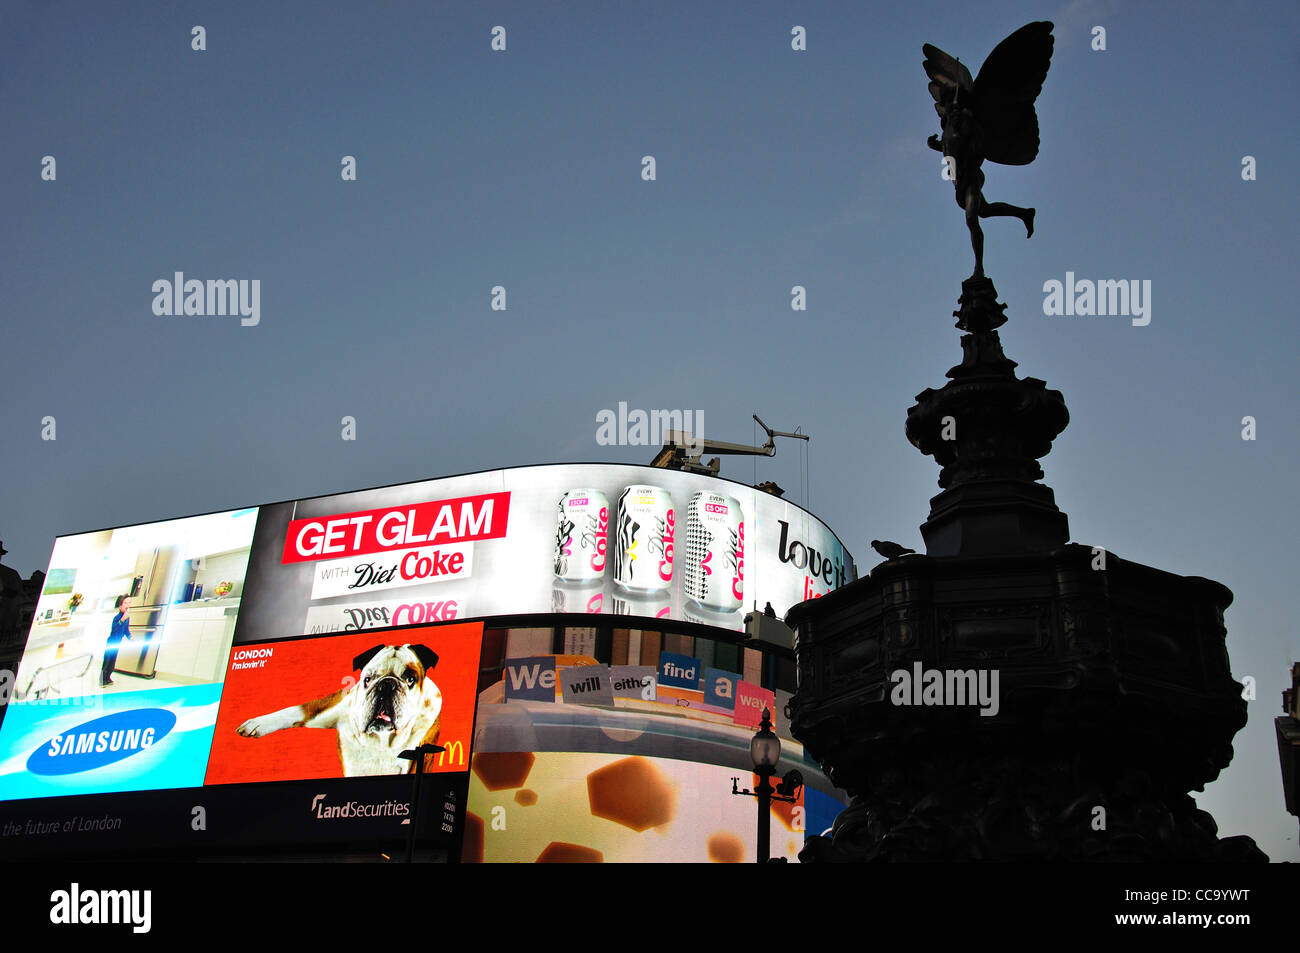 Statua di Anteros e insegne illuminate, Piccadilly Circus, West End, City of Westminster, Londra, Inghilterra, Regno Unito Foto Stock